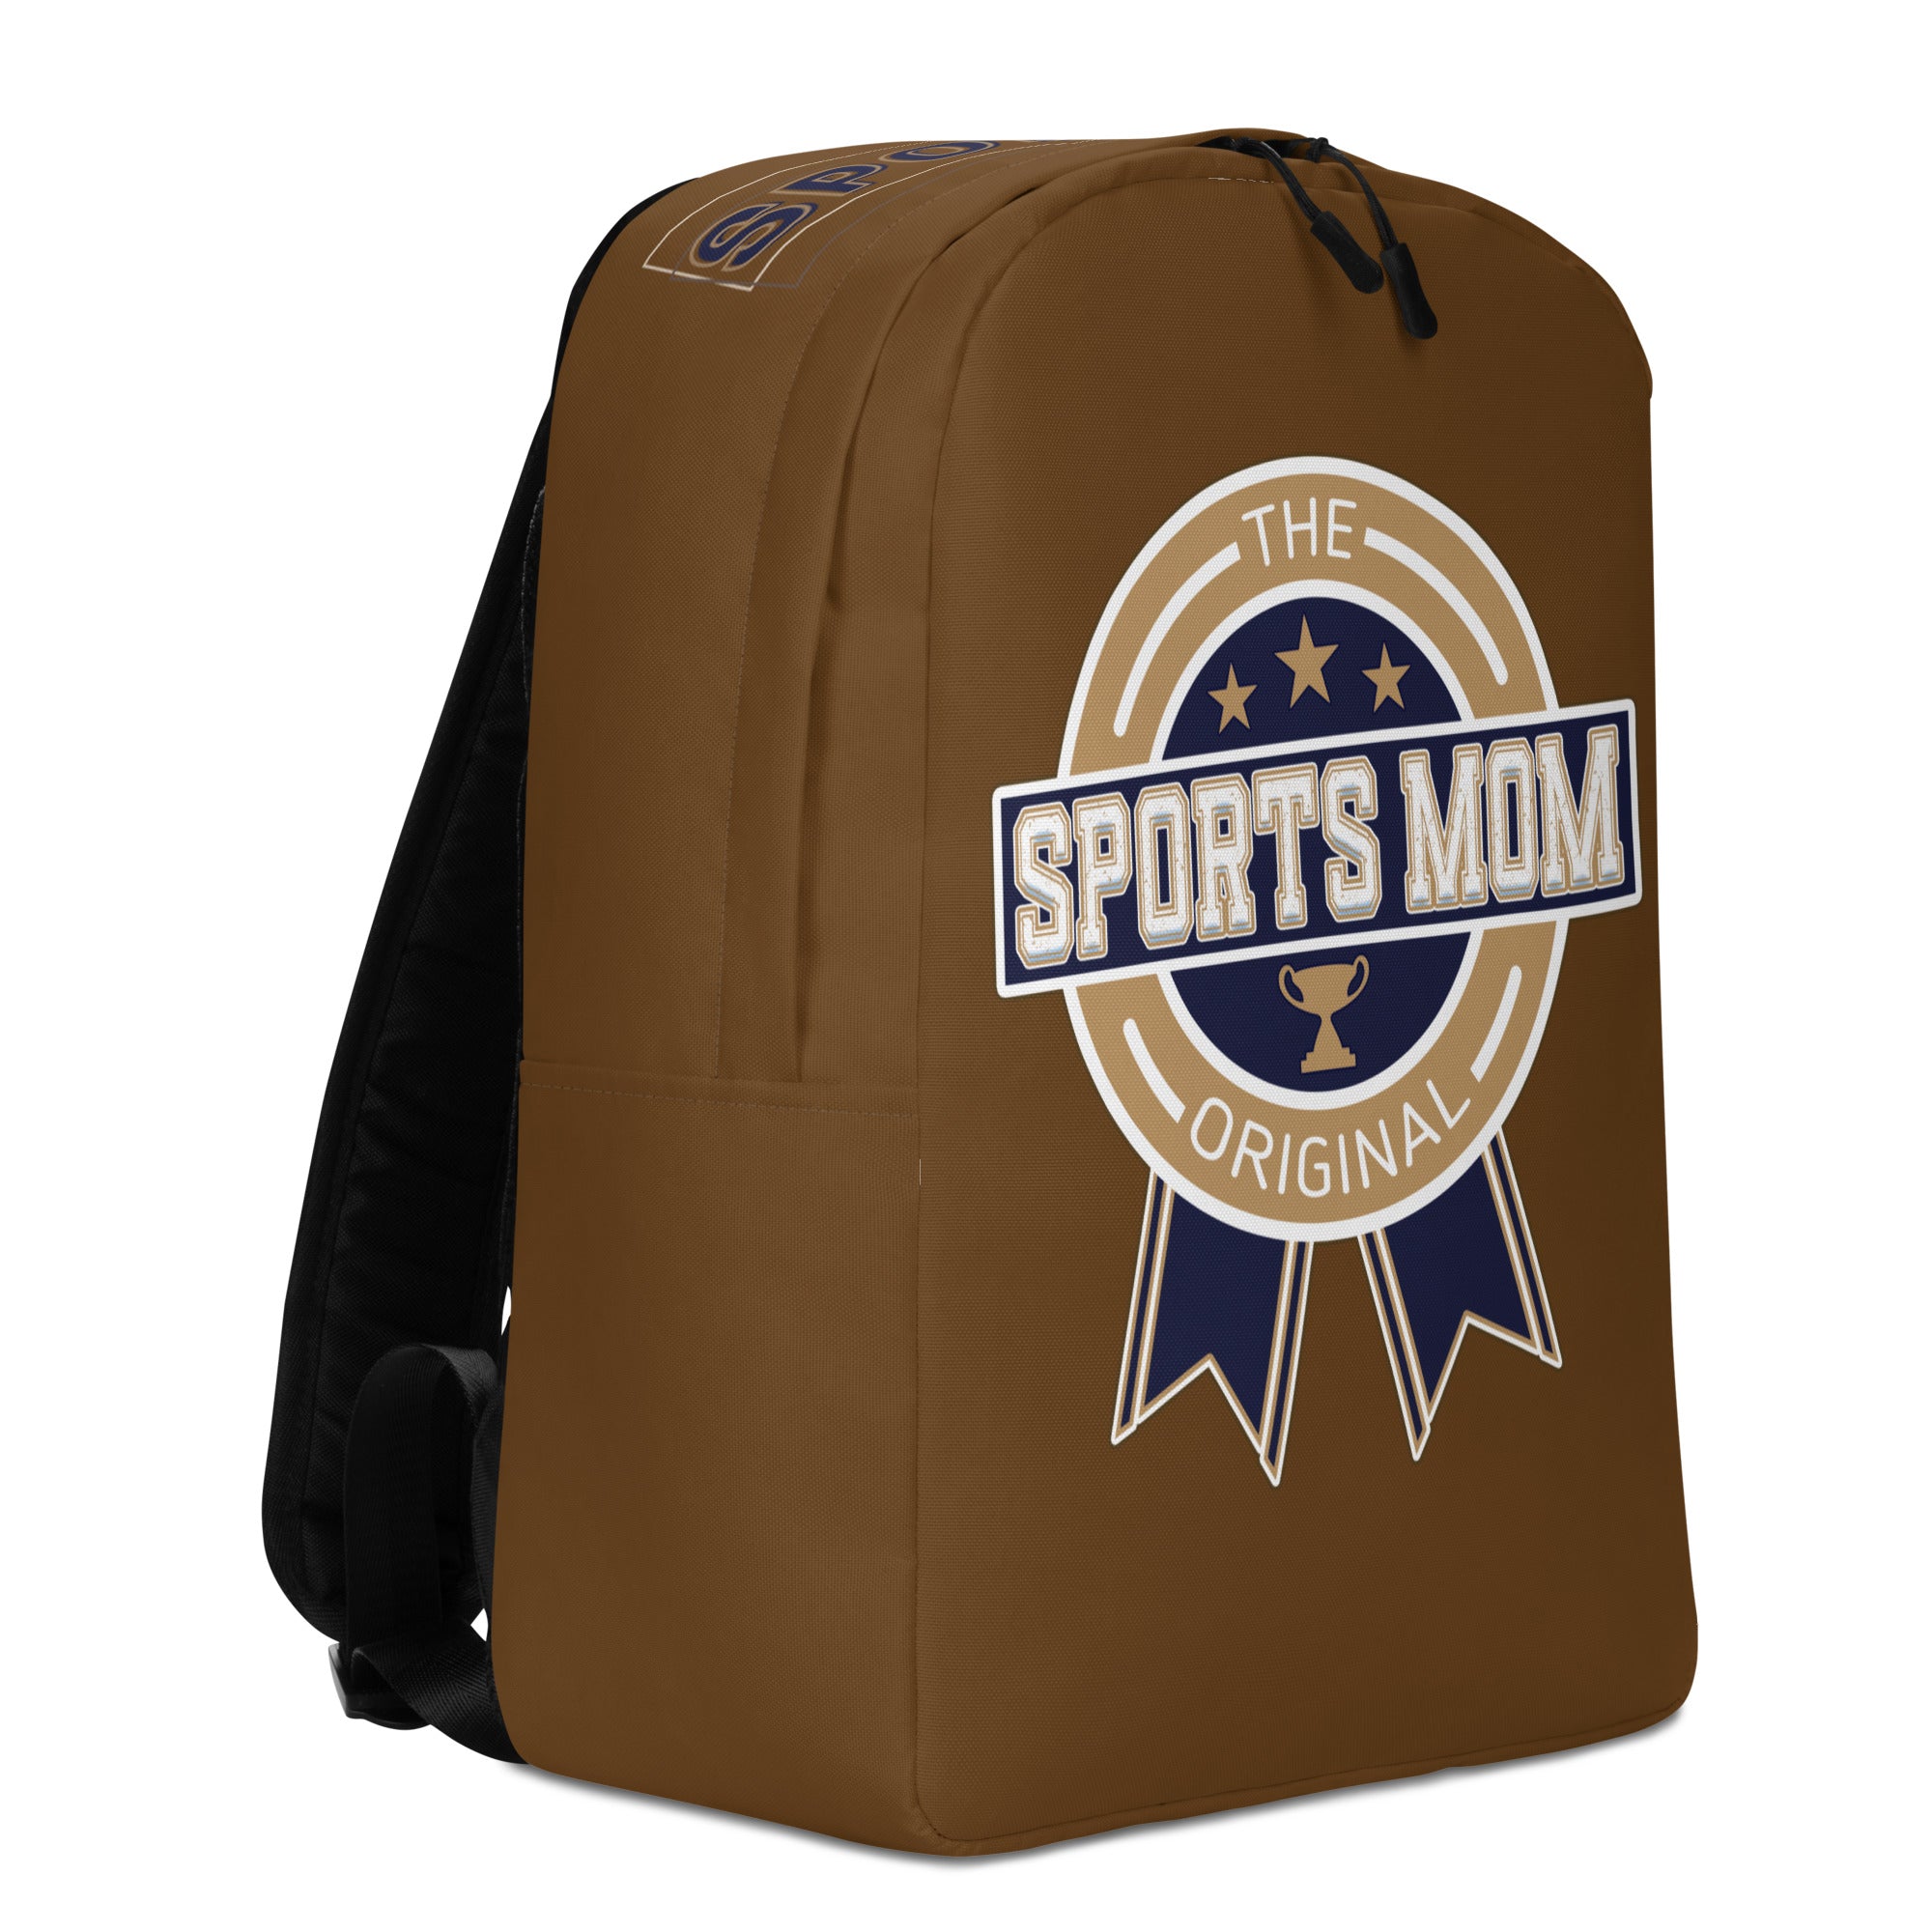 Sports Mom Minimalist Backpack - Away Game - Brown